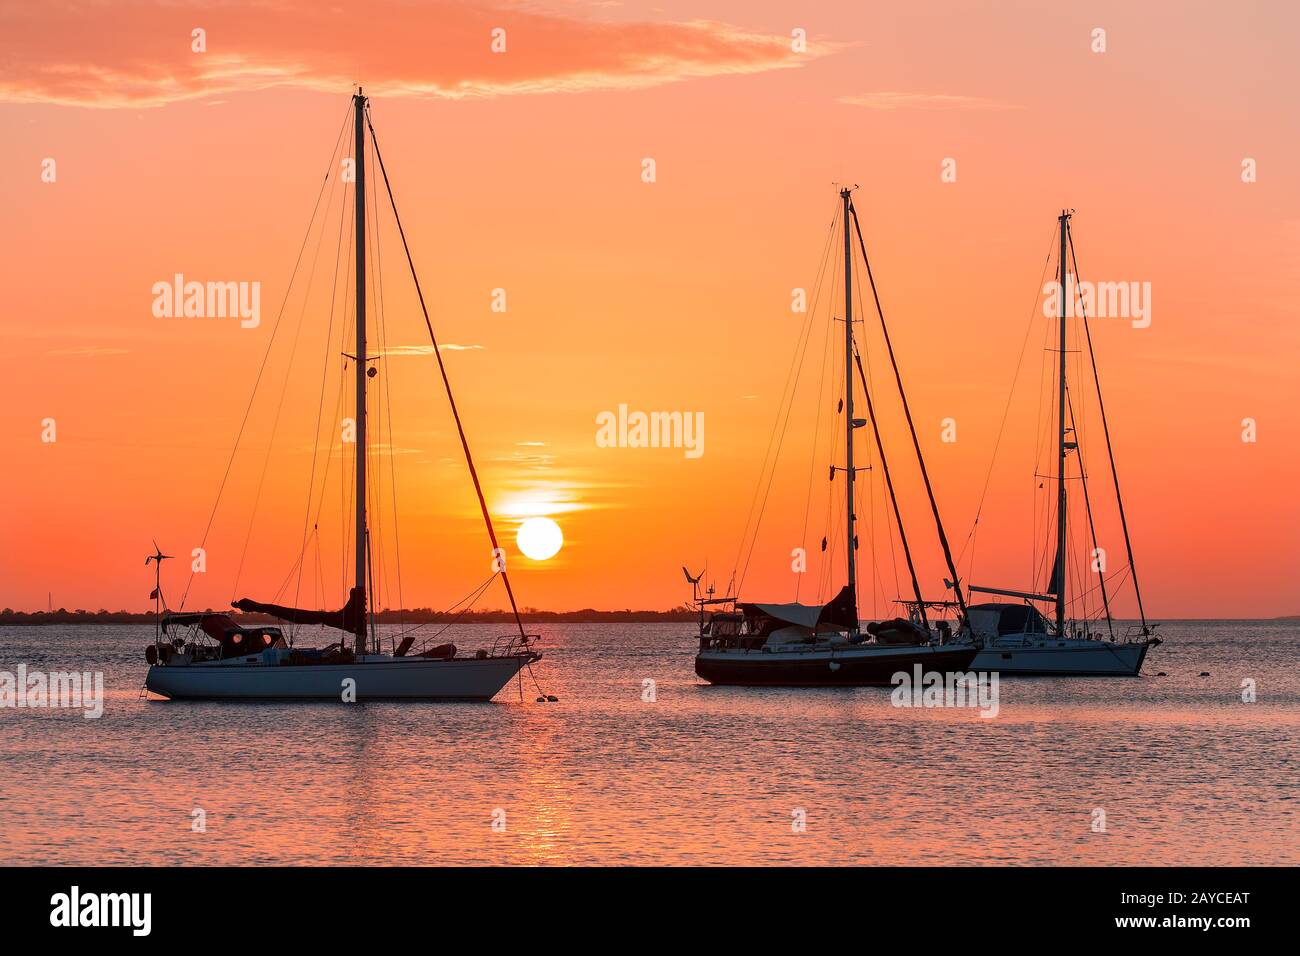 Three sailboats on sea at sunset Stock Photo